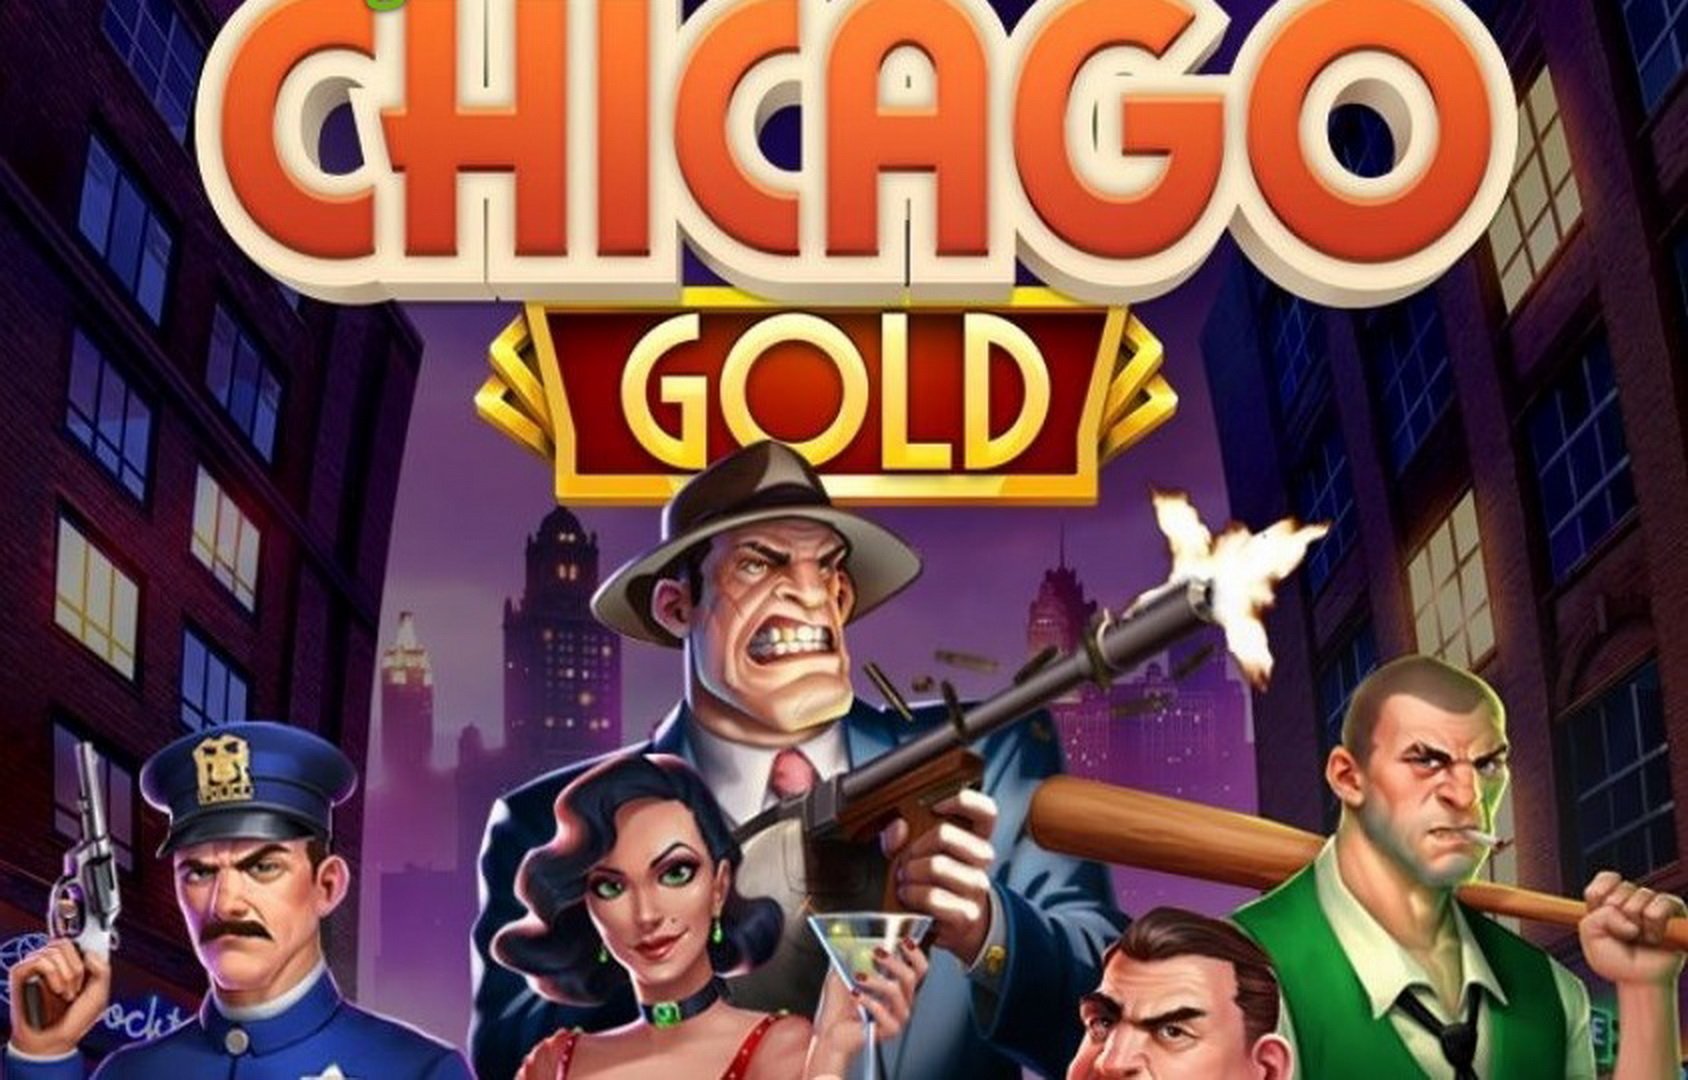 Chicago gold on #betmgm #slots